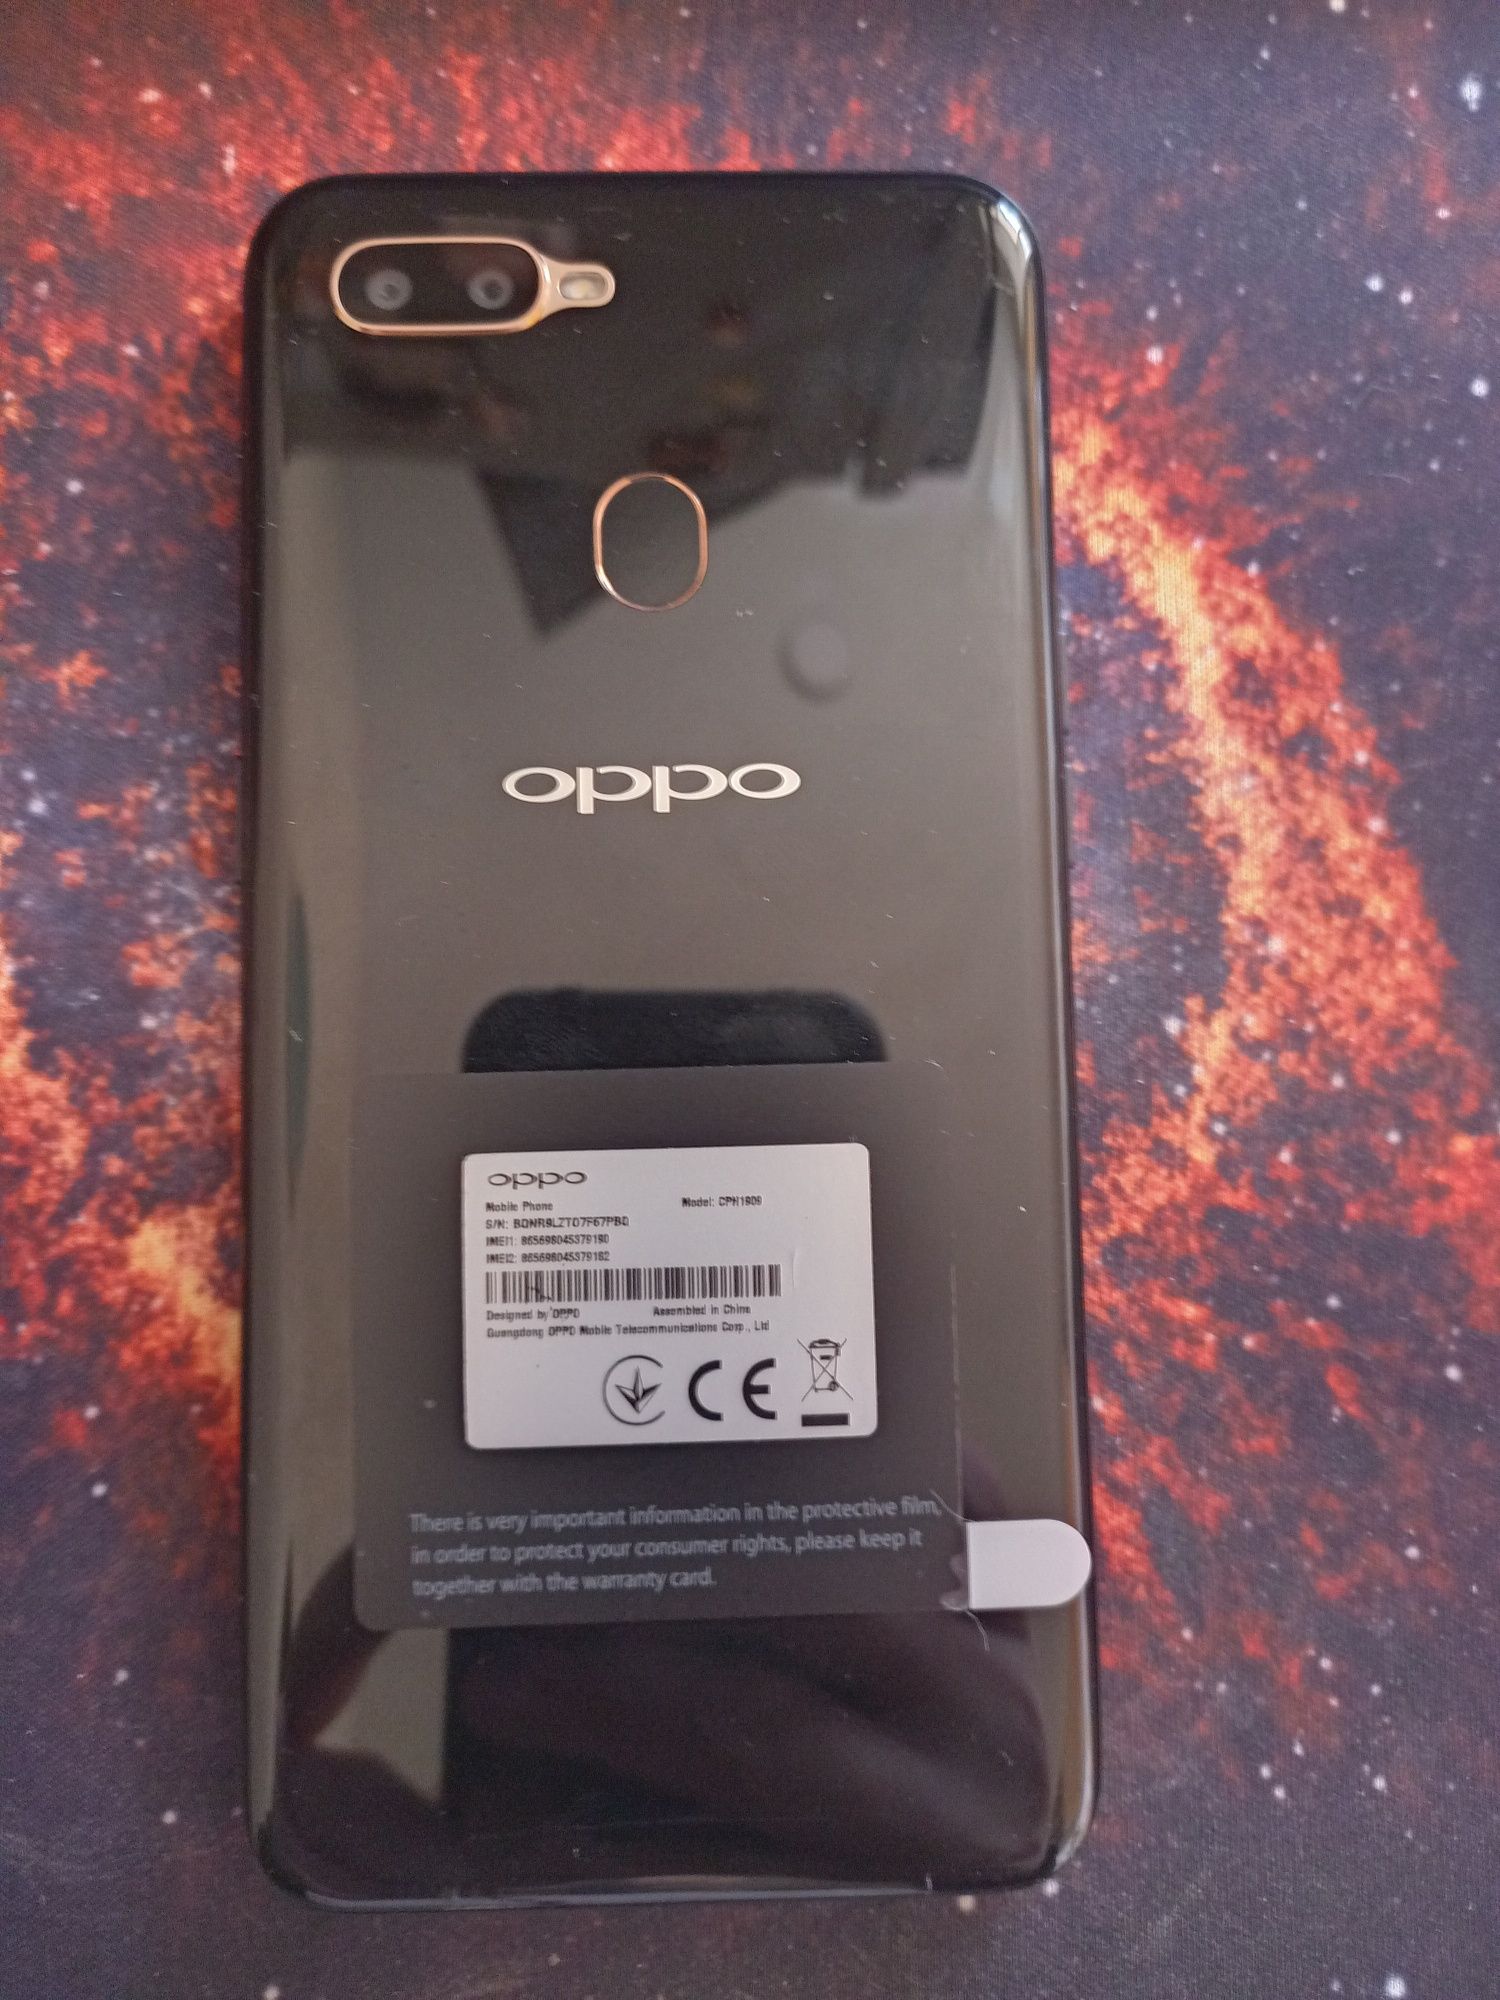 Смартфон OPPO A5S